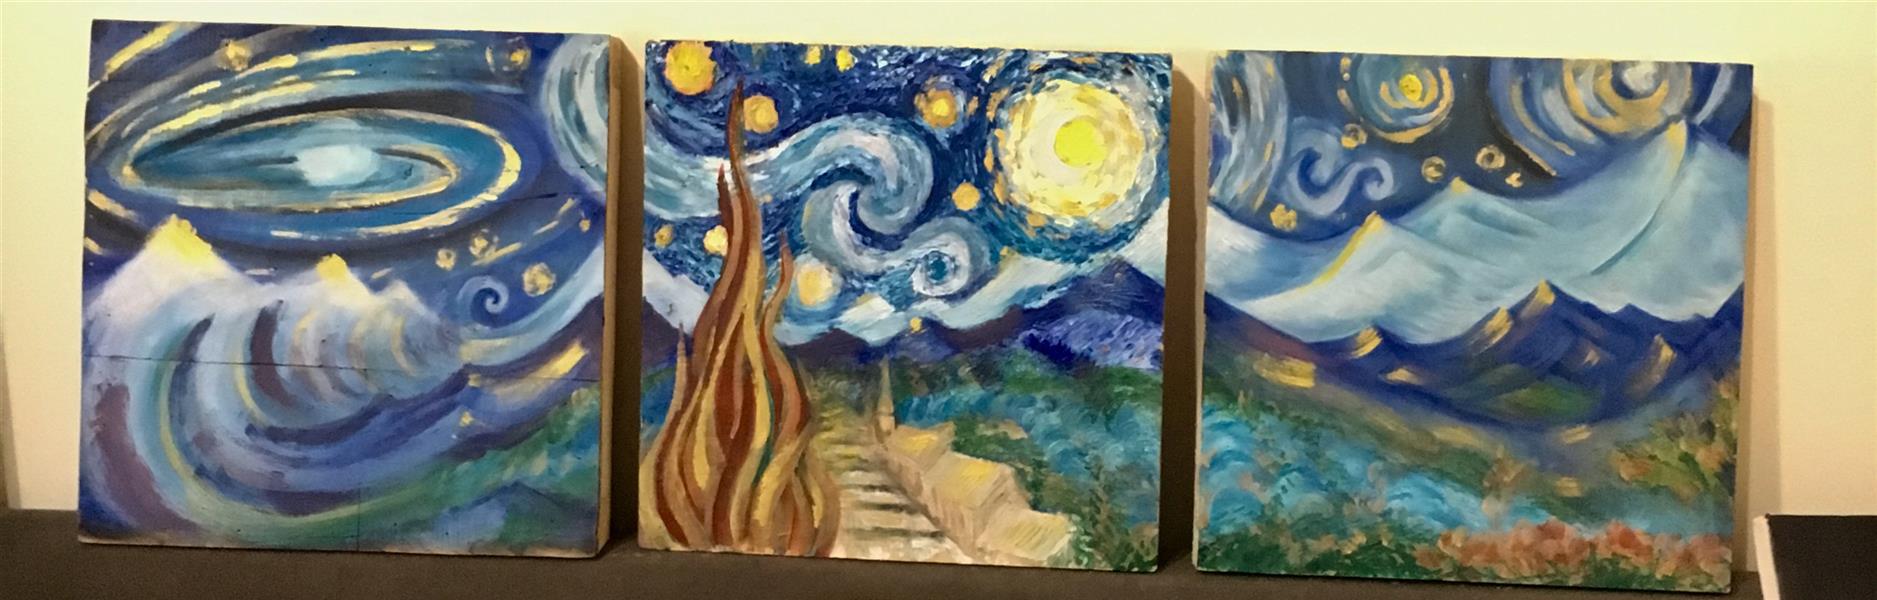 هنر نقاشی و گرافیک محفل نقاشی و گرافیک Sara Azimi  # Van Gogh # paint # painting #art